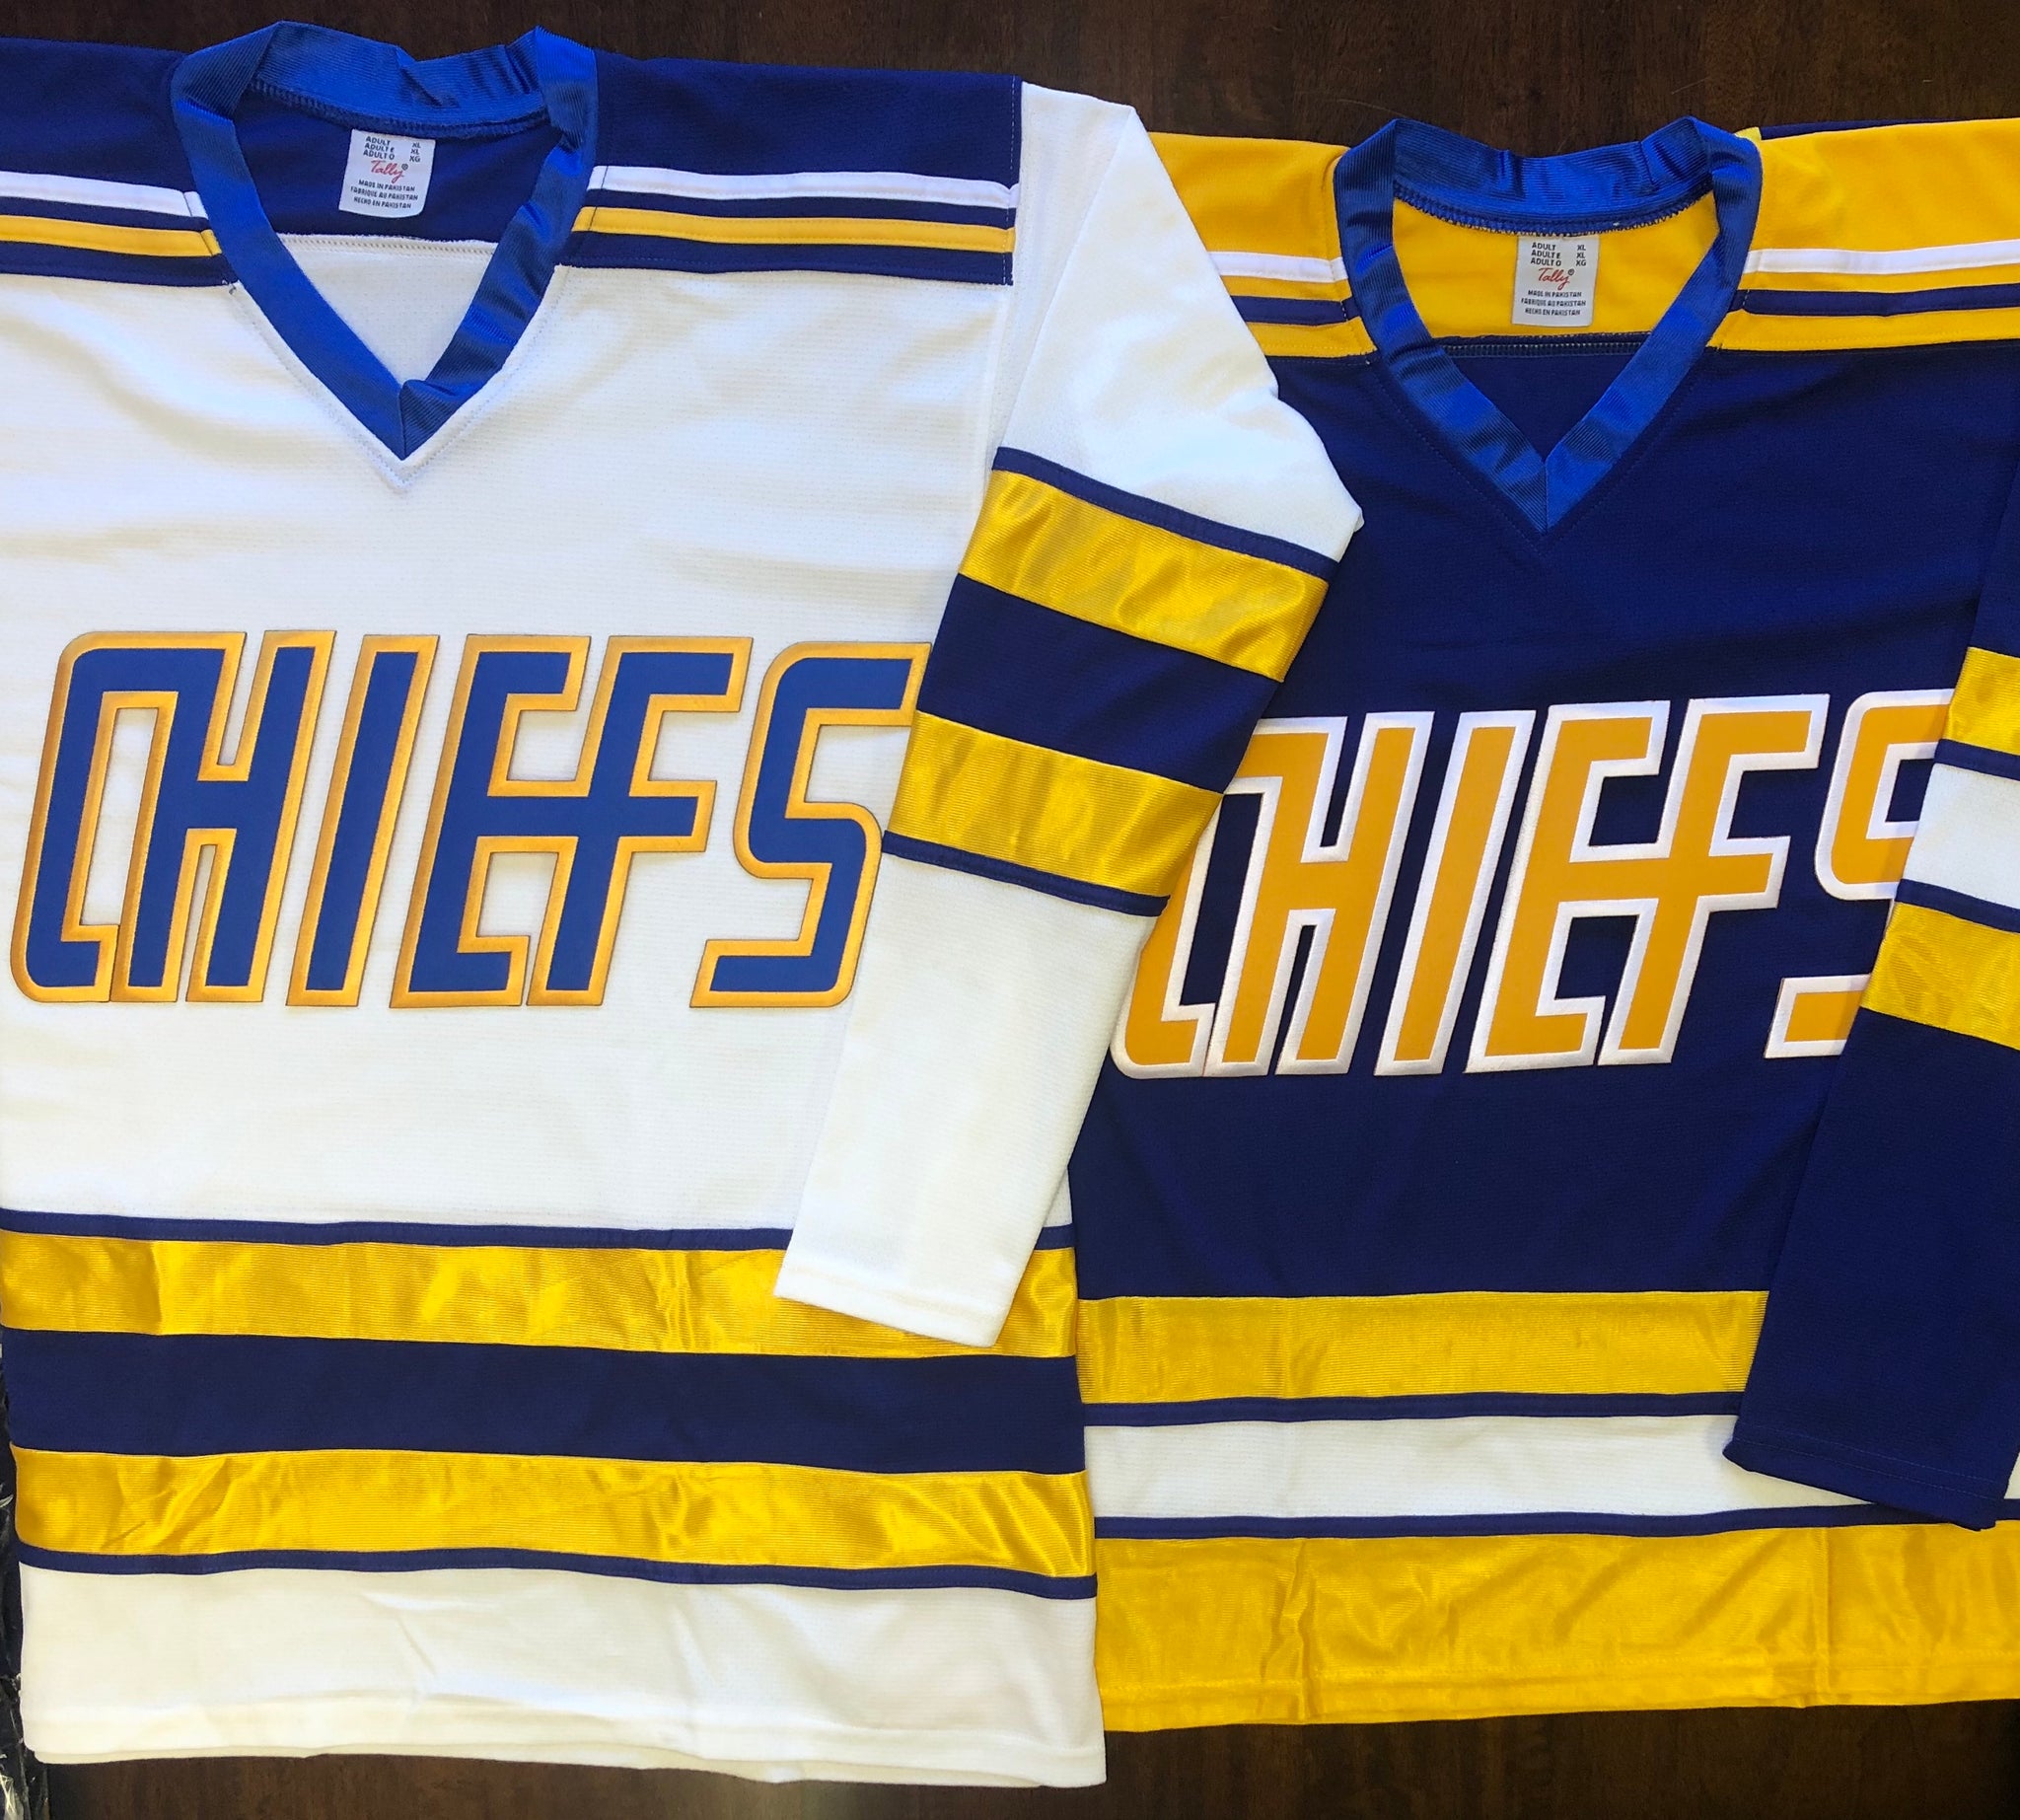 Custom Hockey Jerseys with a CHIEFS Twill Logo